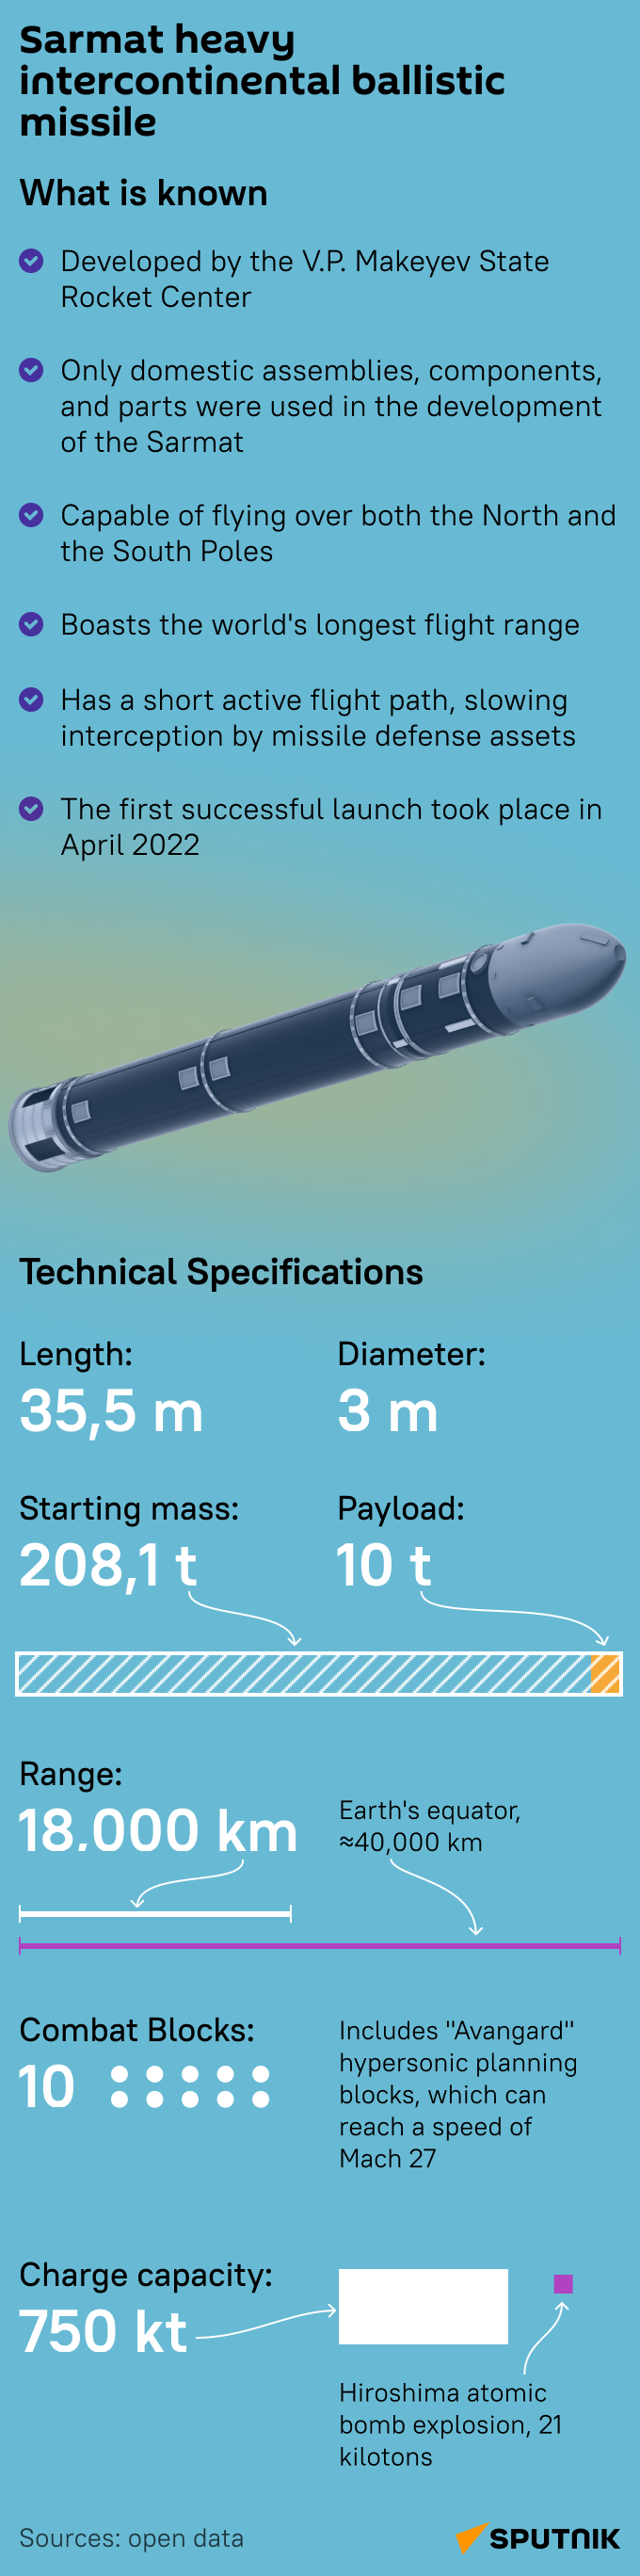 Sarmat heavy intercontinental ballistic missile - Sputnik India